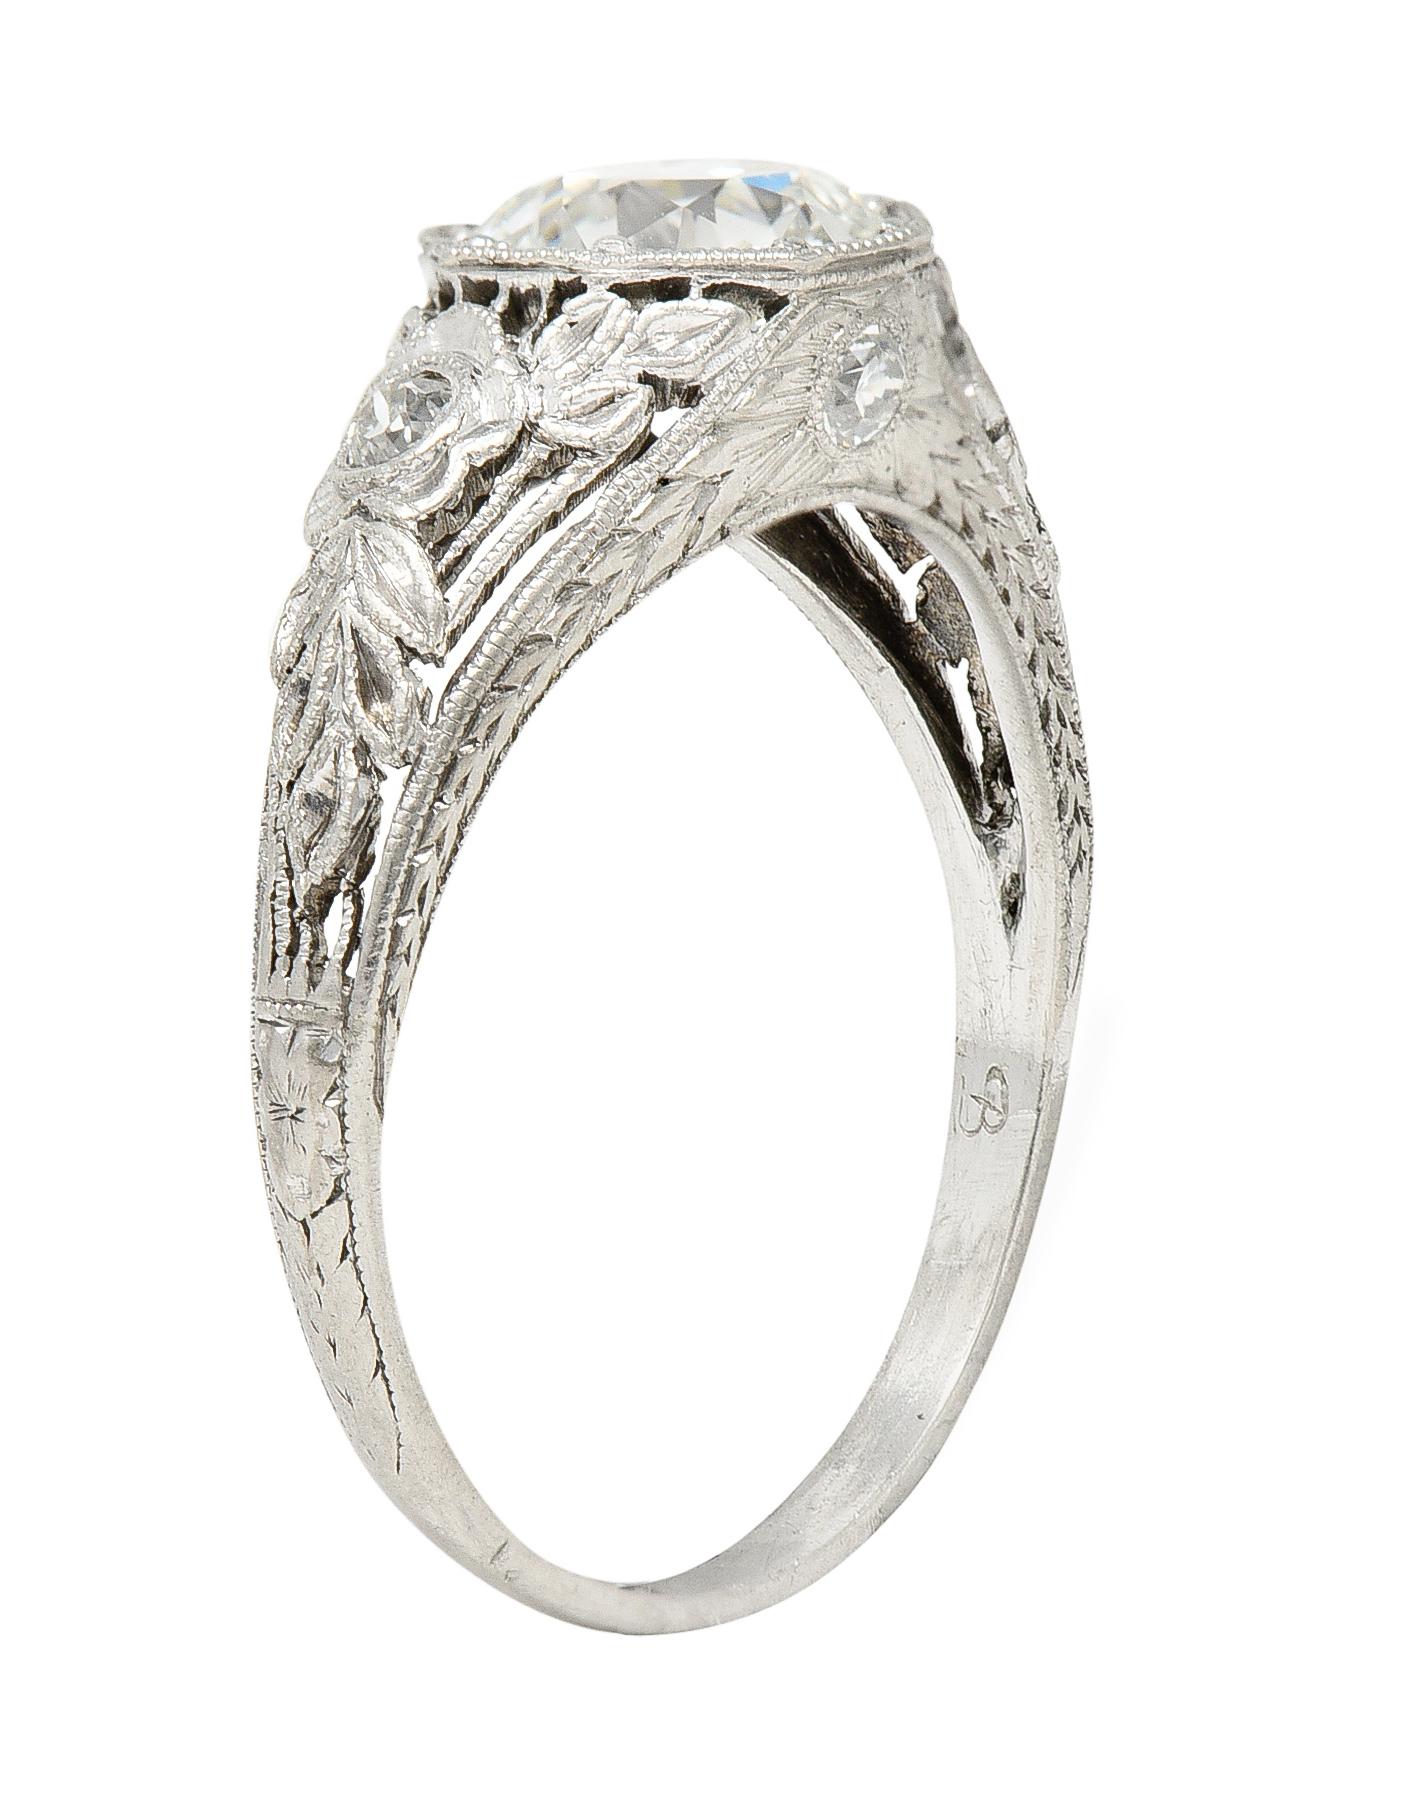 Antique 1.75 Carats Diamond Platinum Floral Laurel Engagement Ring In Excellent Condition For Sale In Philadelphia, PA